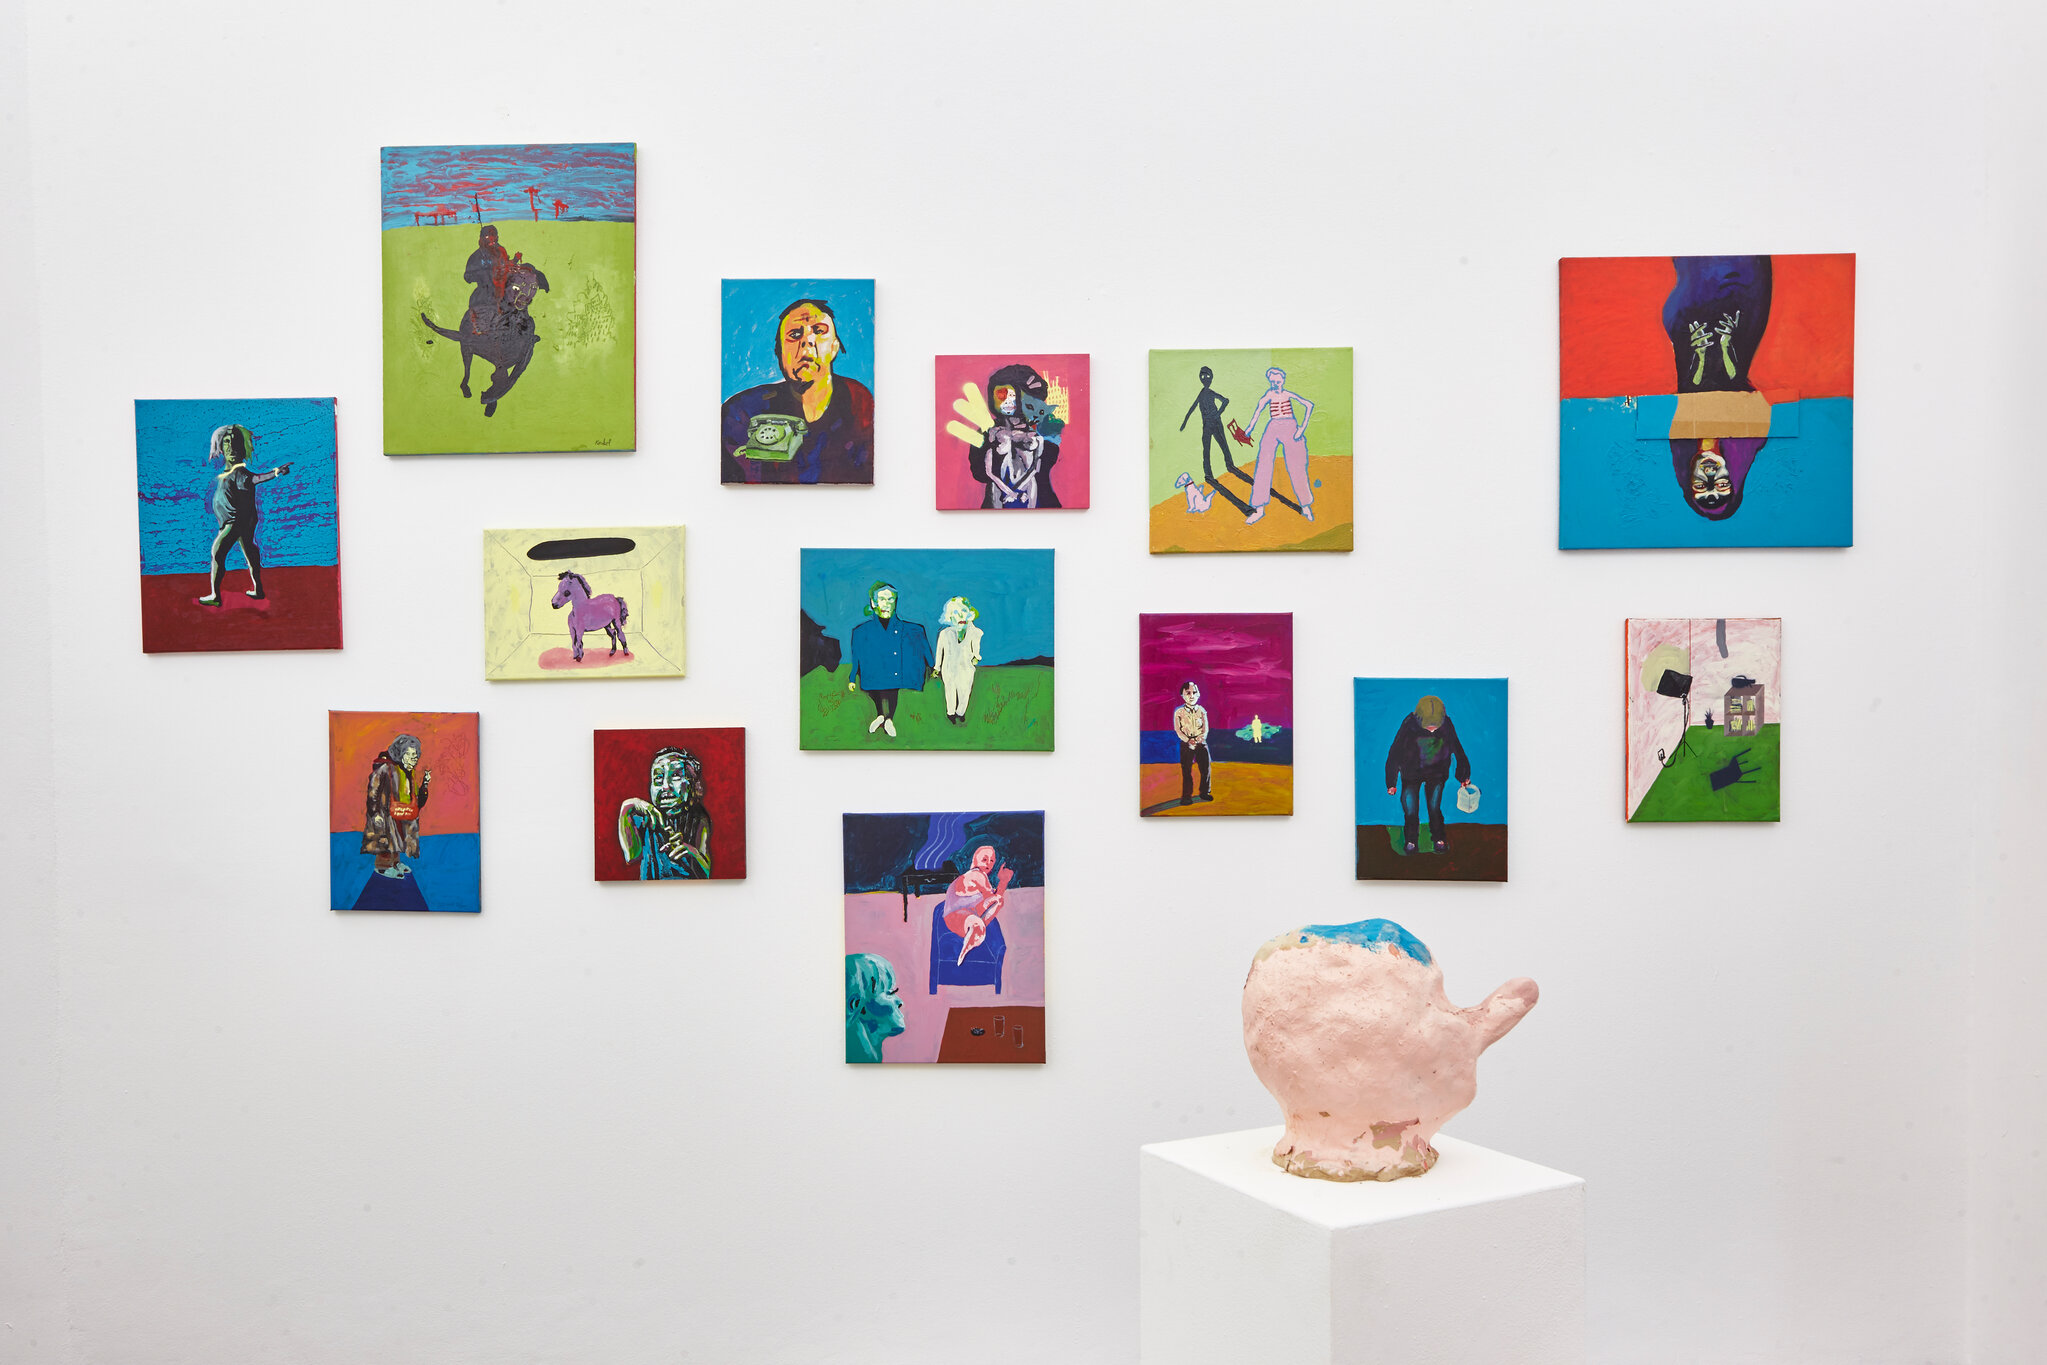 Jon Konkol, Installation views from "Pink Pony, Yellow Room"